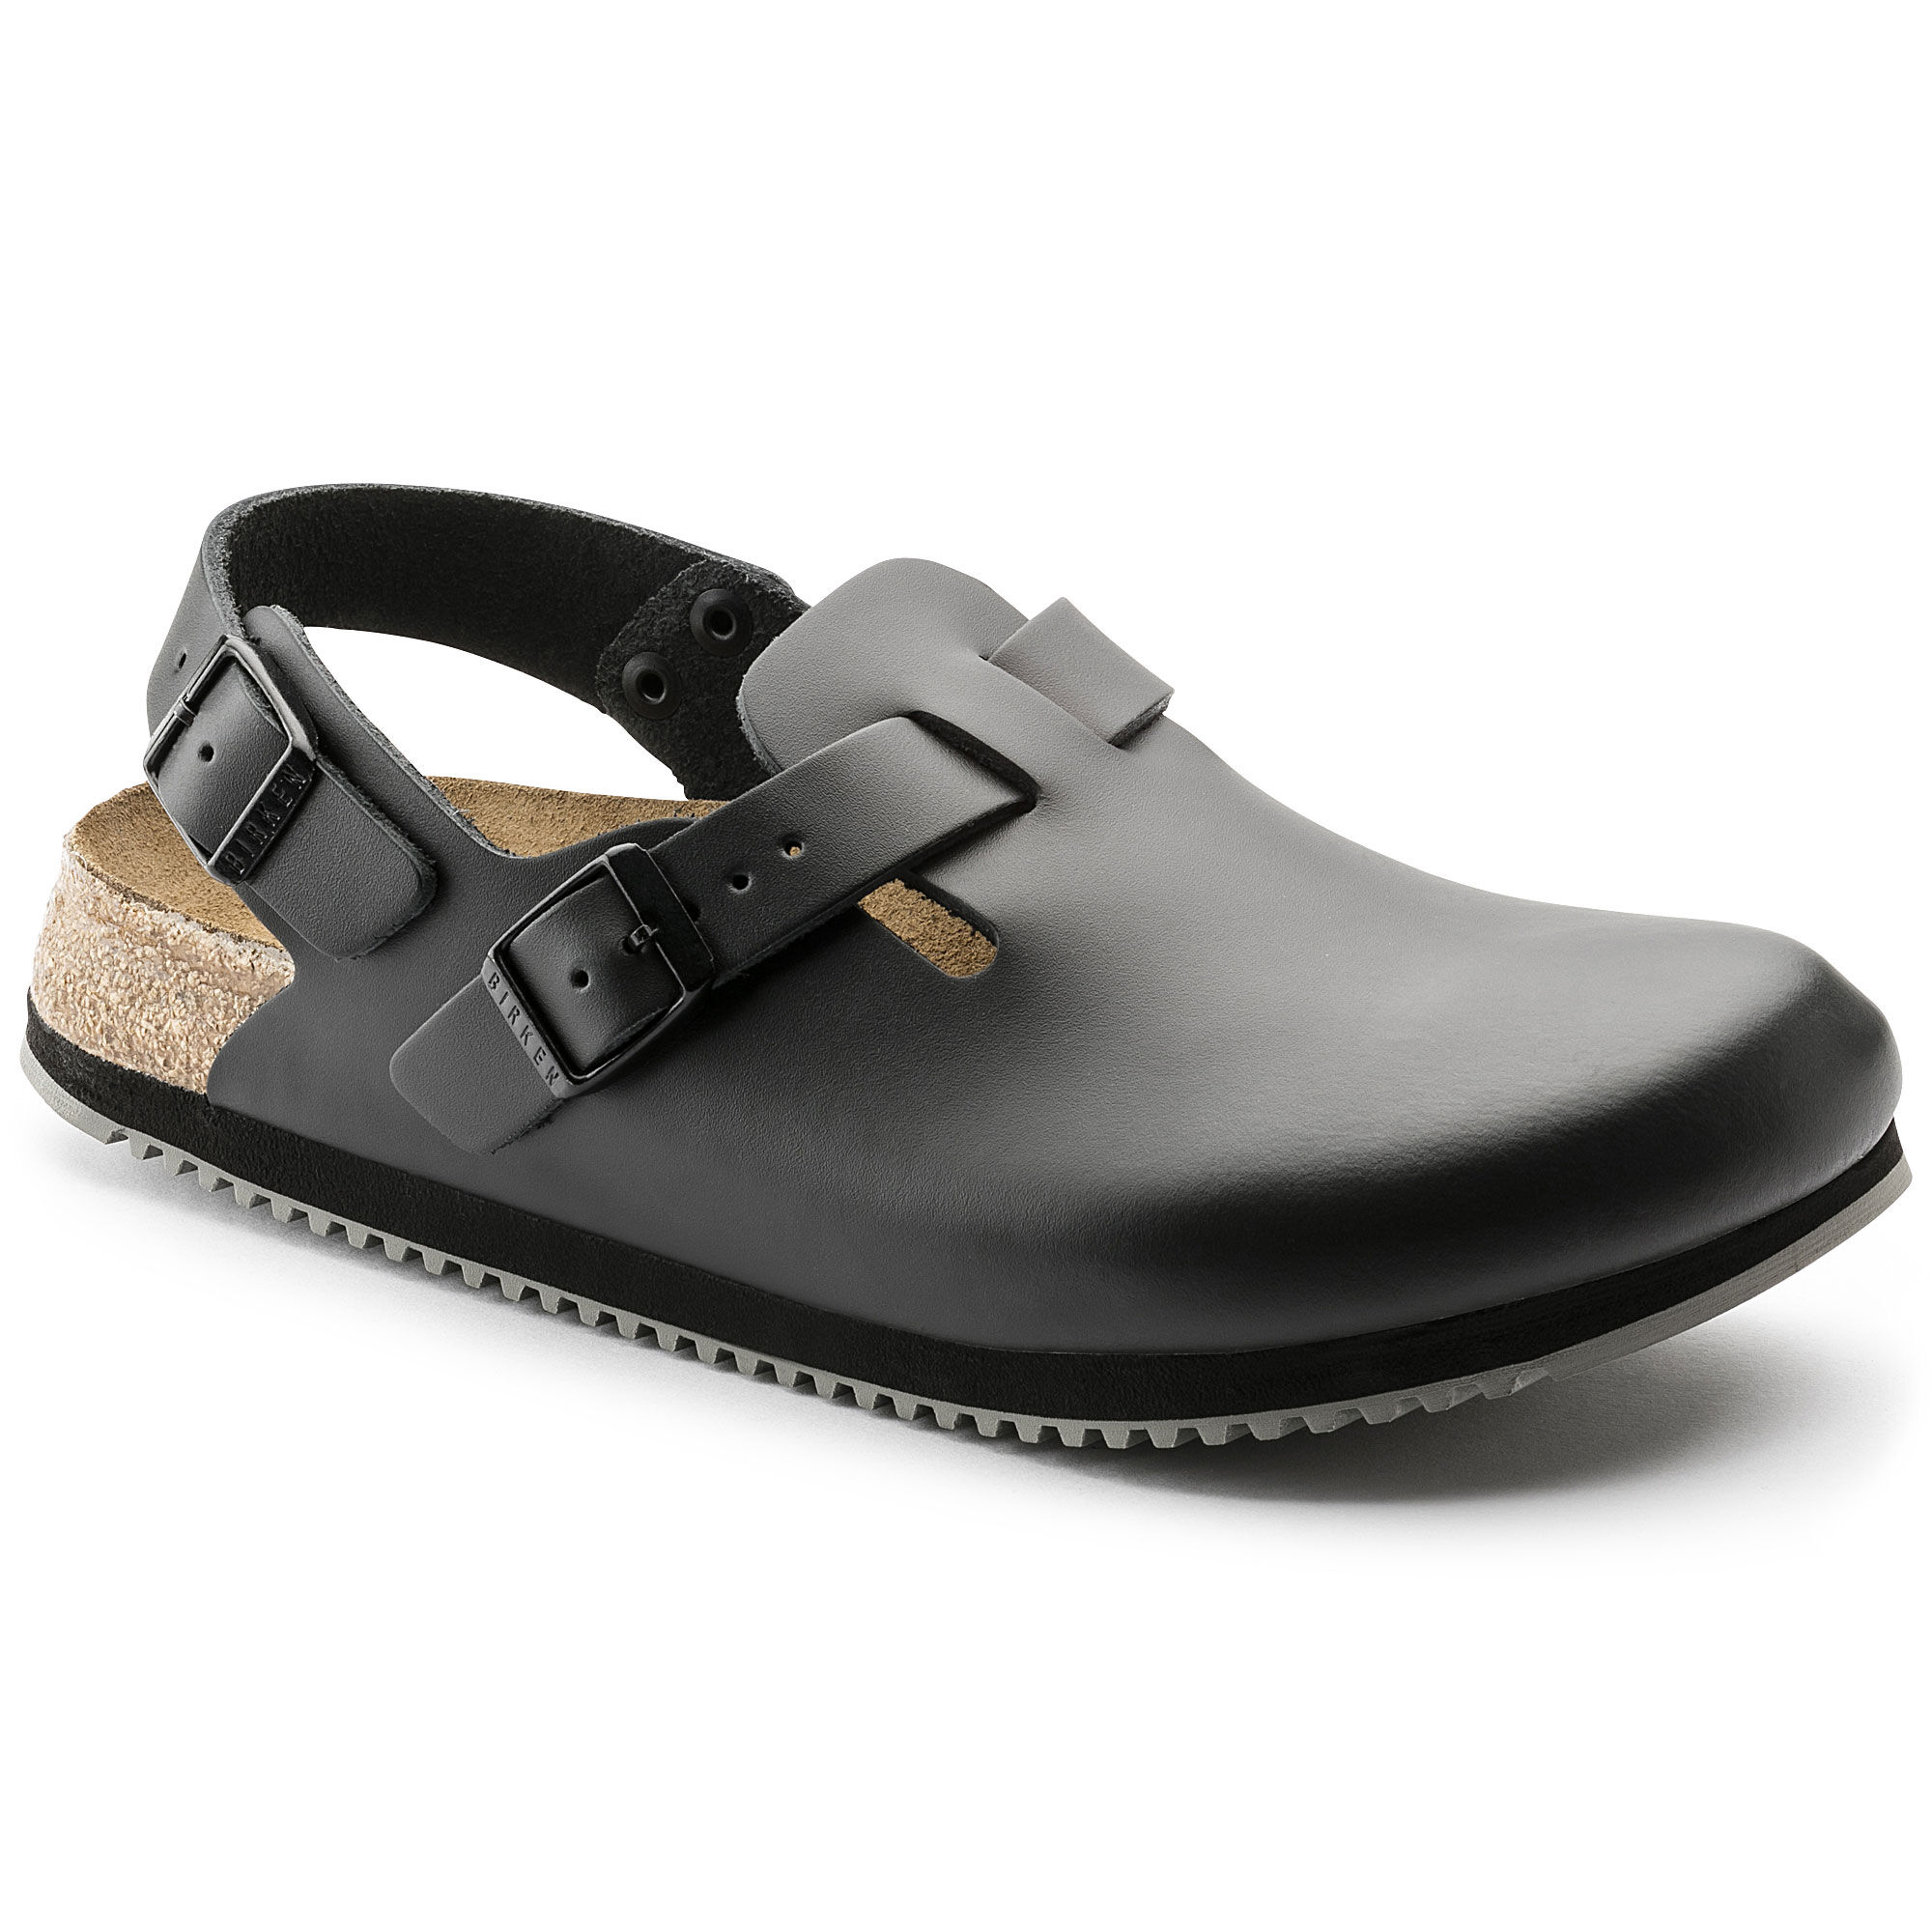 birkenstock unisex professional tokyo super grip leather slip resistant work shoe